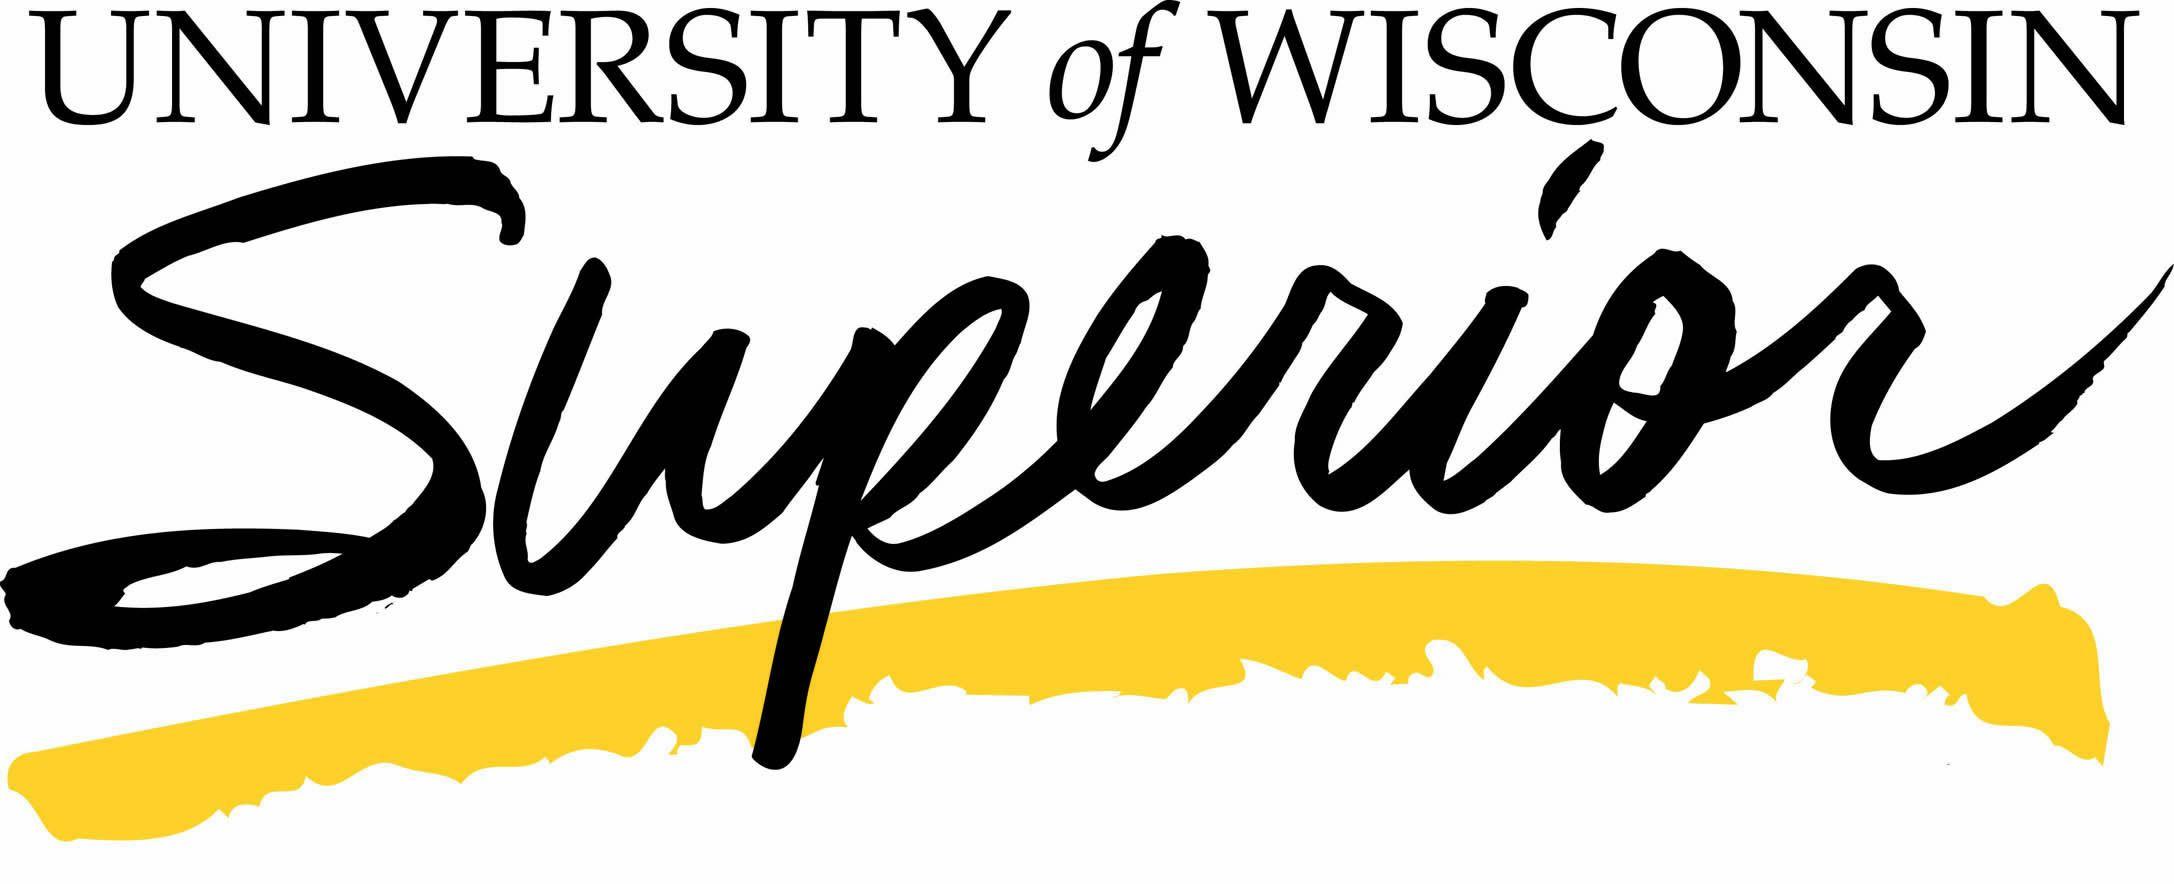 Msep Logo - University of Wisconsin. Midwest Student Exchange Program